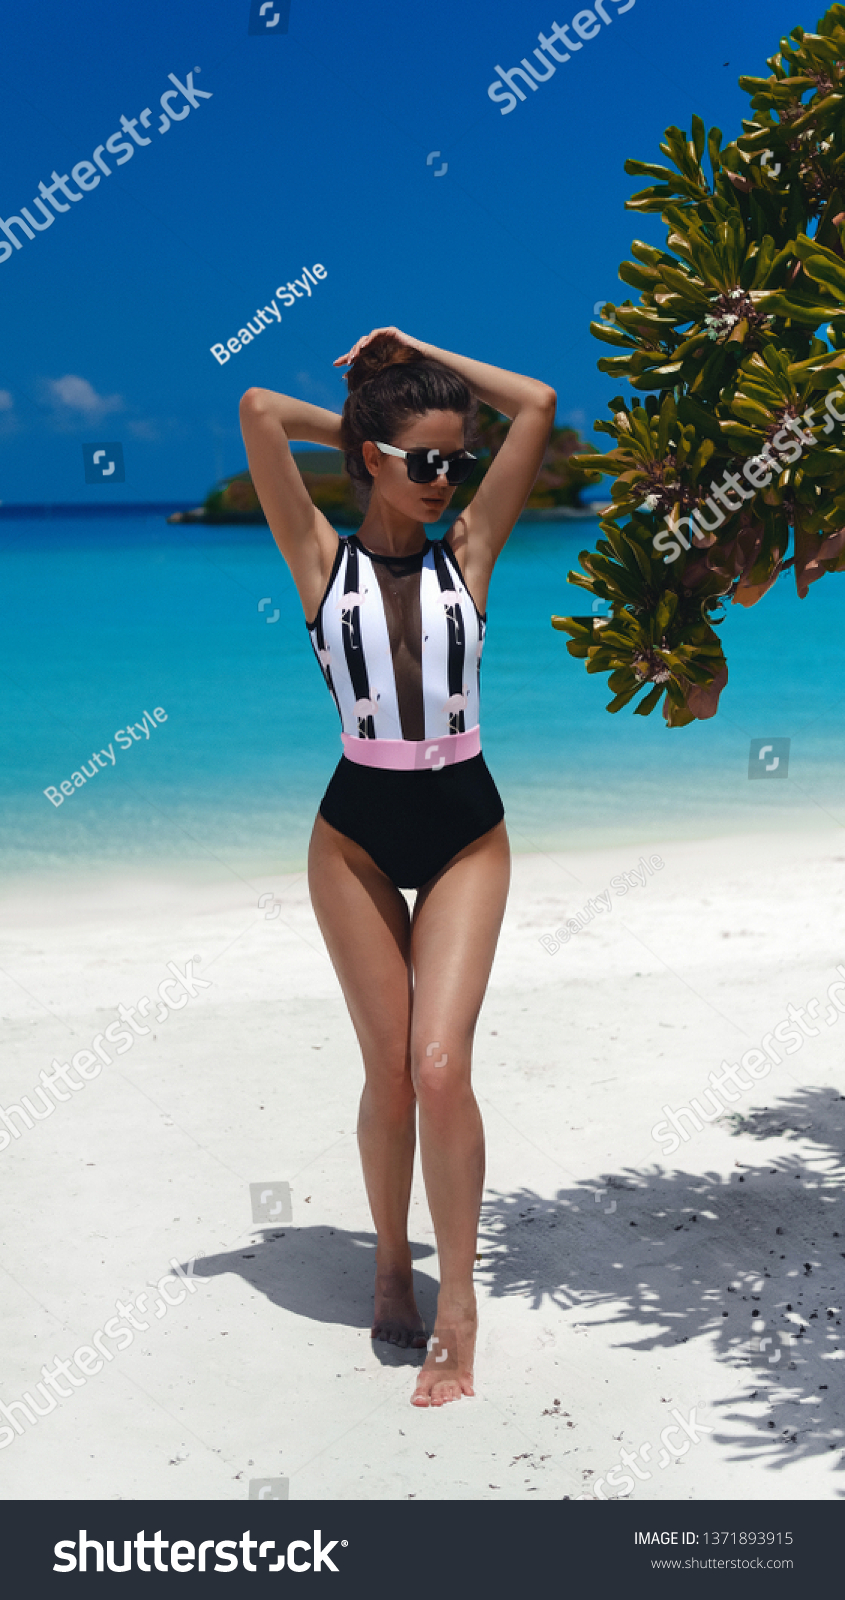 Summer vacation. Fashionable Woman in bikini suntanning on tropical beach. Slim girl posing on exotic island by beautiful turquoise ocean. Brunette model in trendy swimwear resting in Maldives lagoon. #1371893915